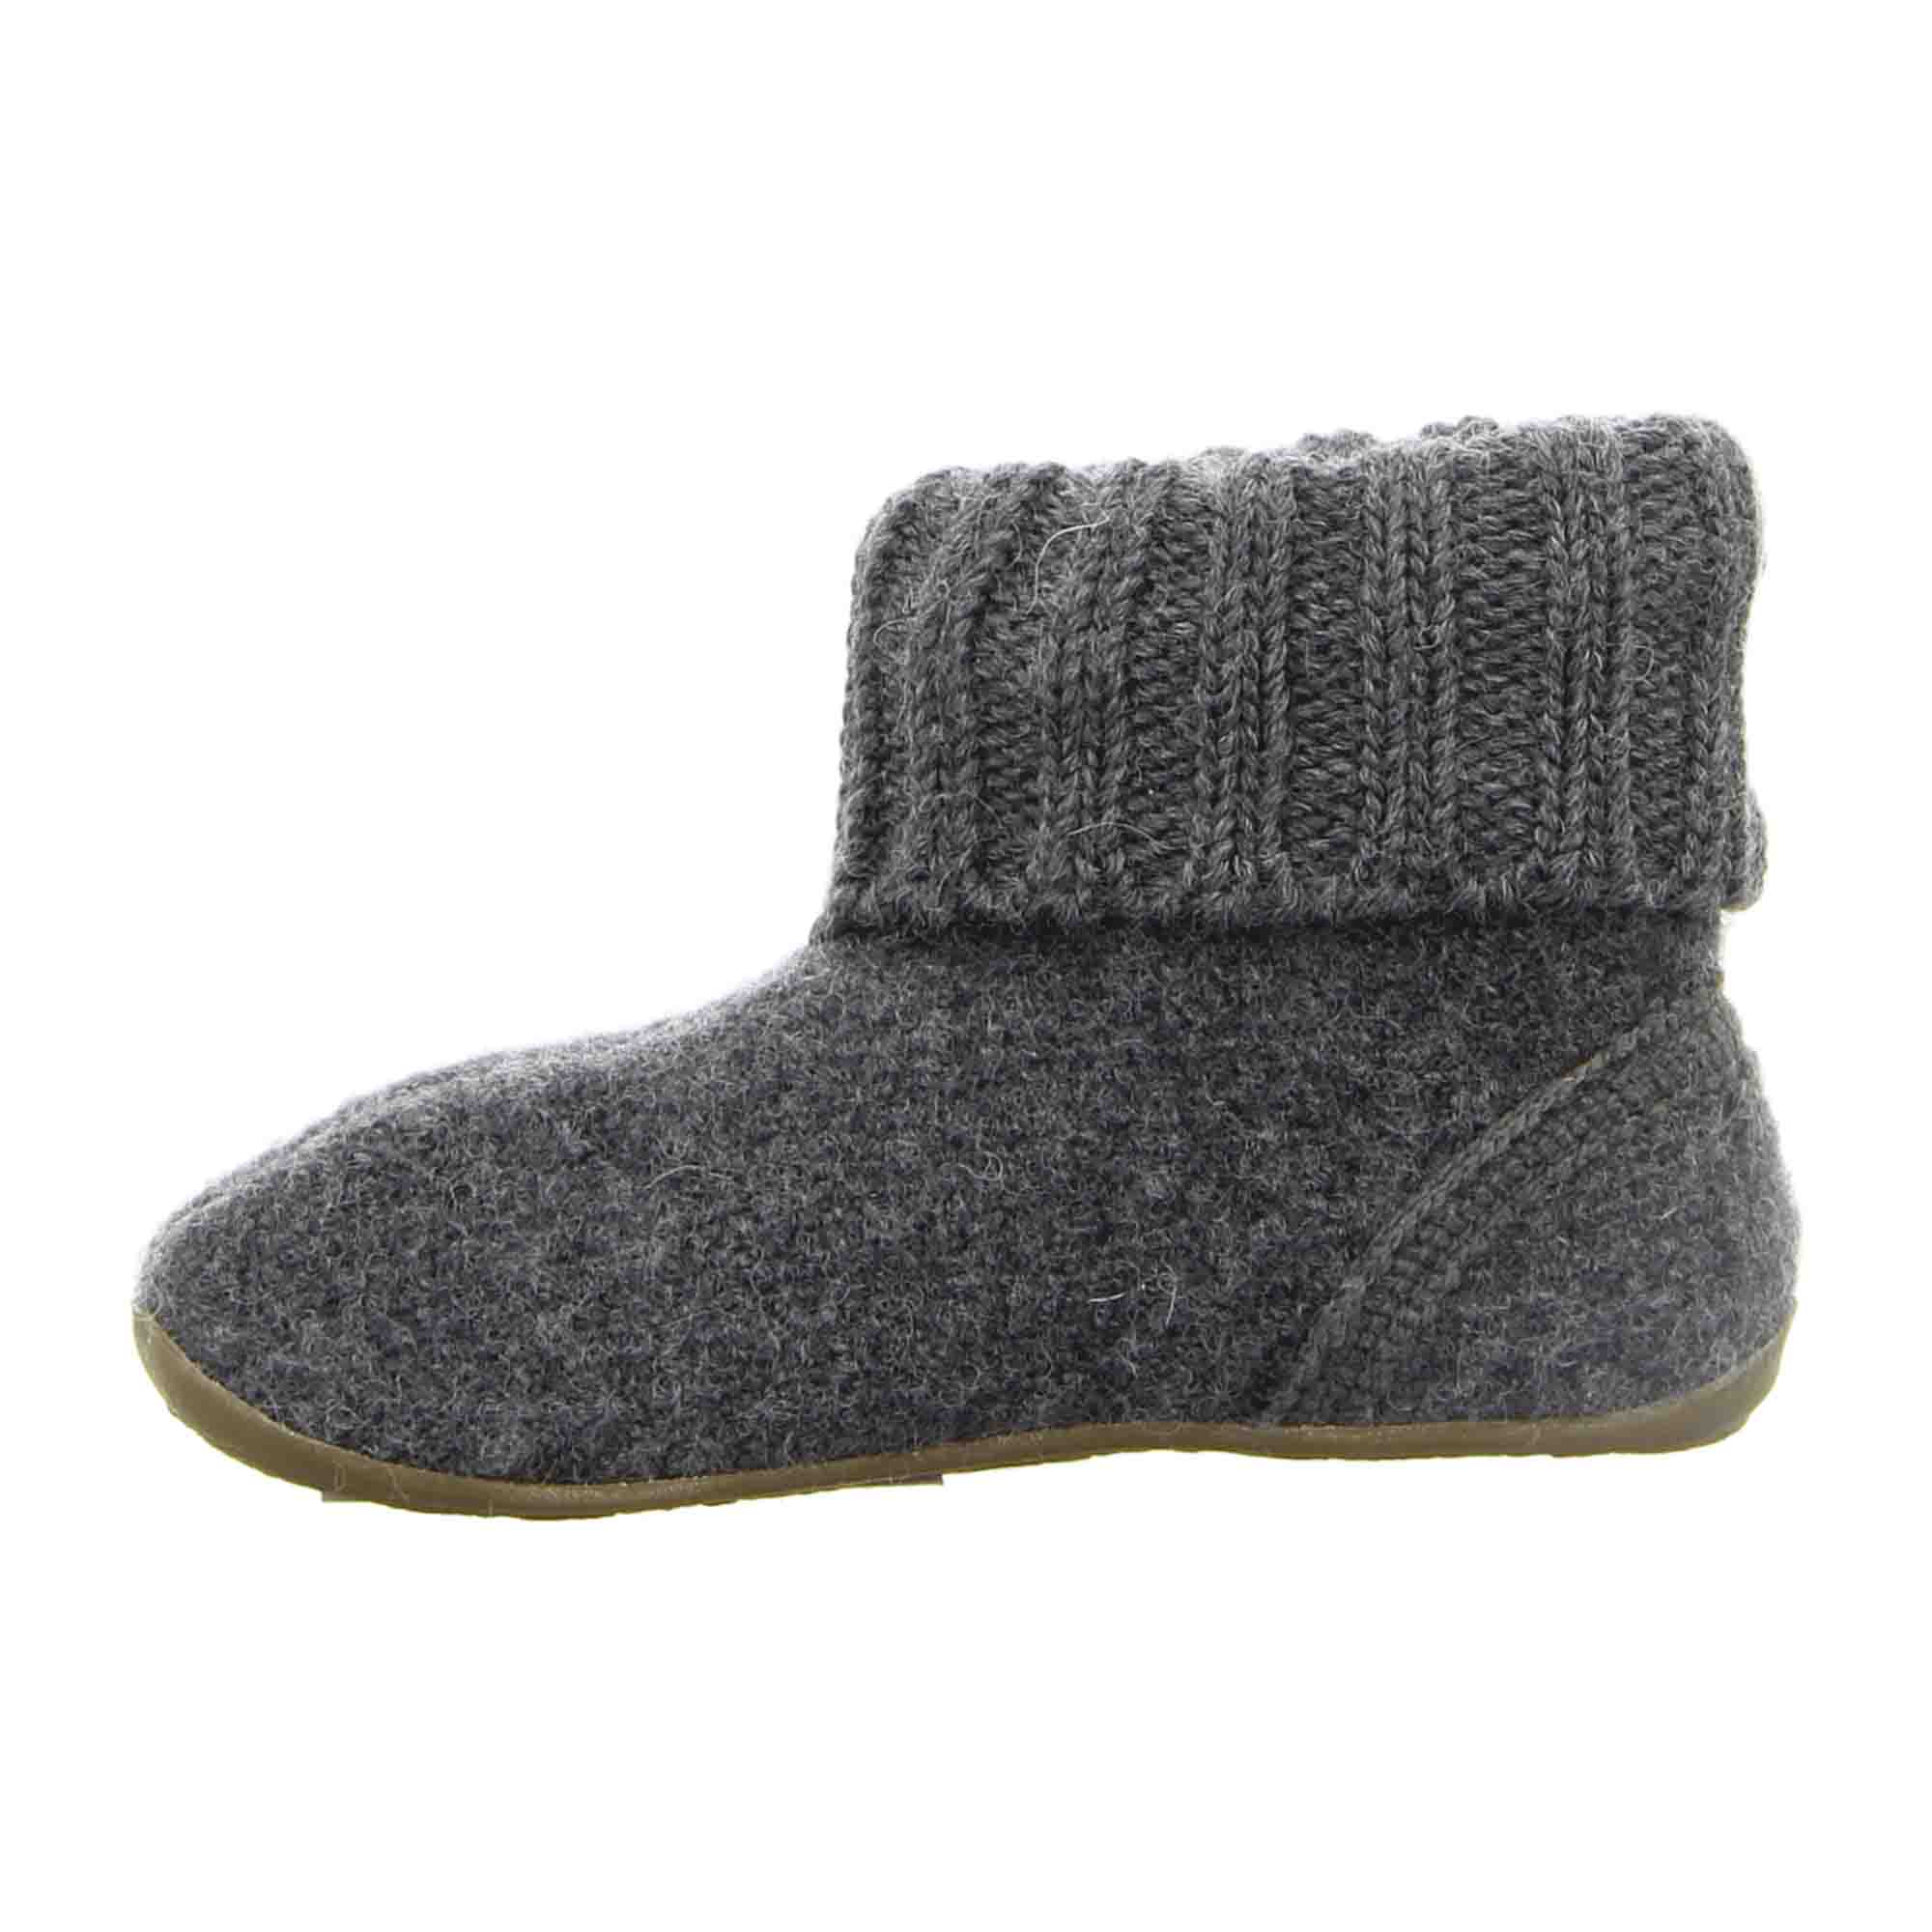 Haflinger Karlo Kids Anthracite Grey Slippers - Comfortable & Durable